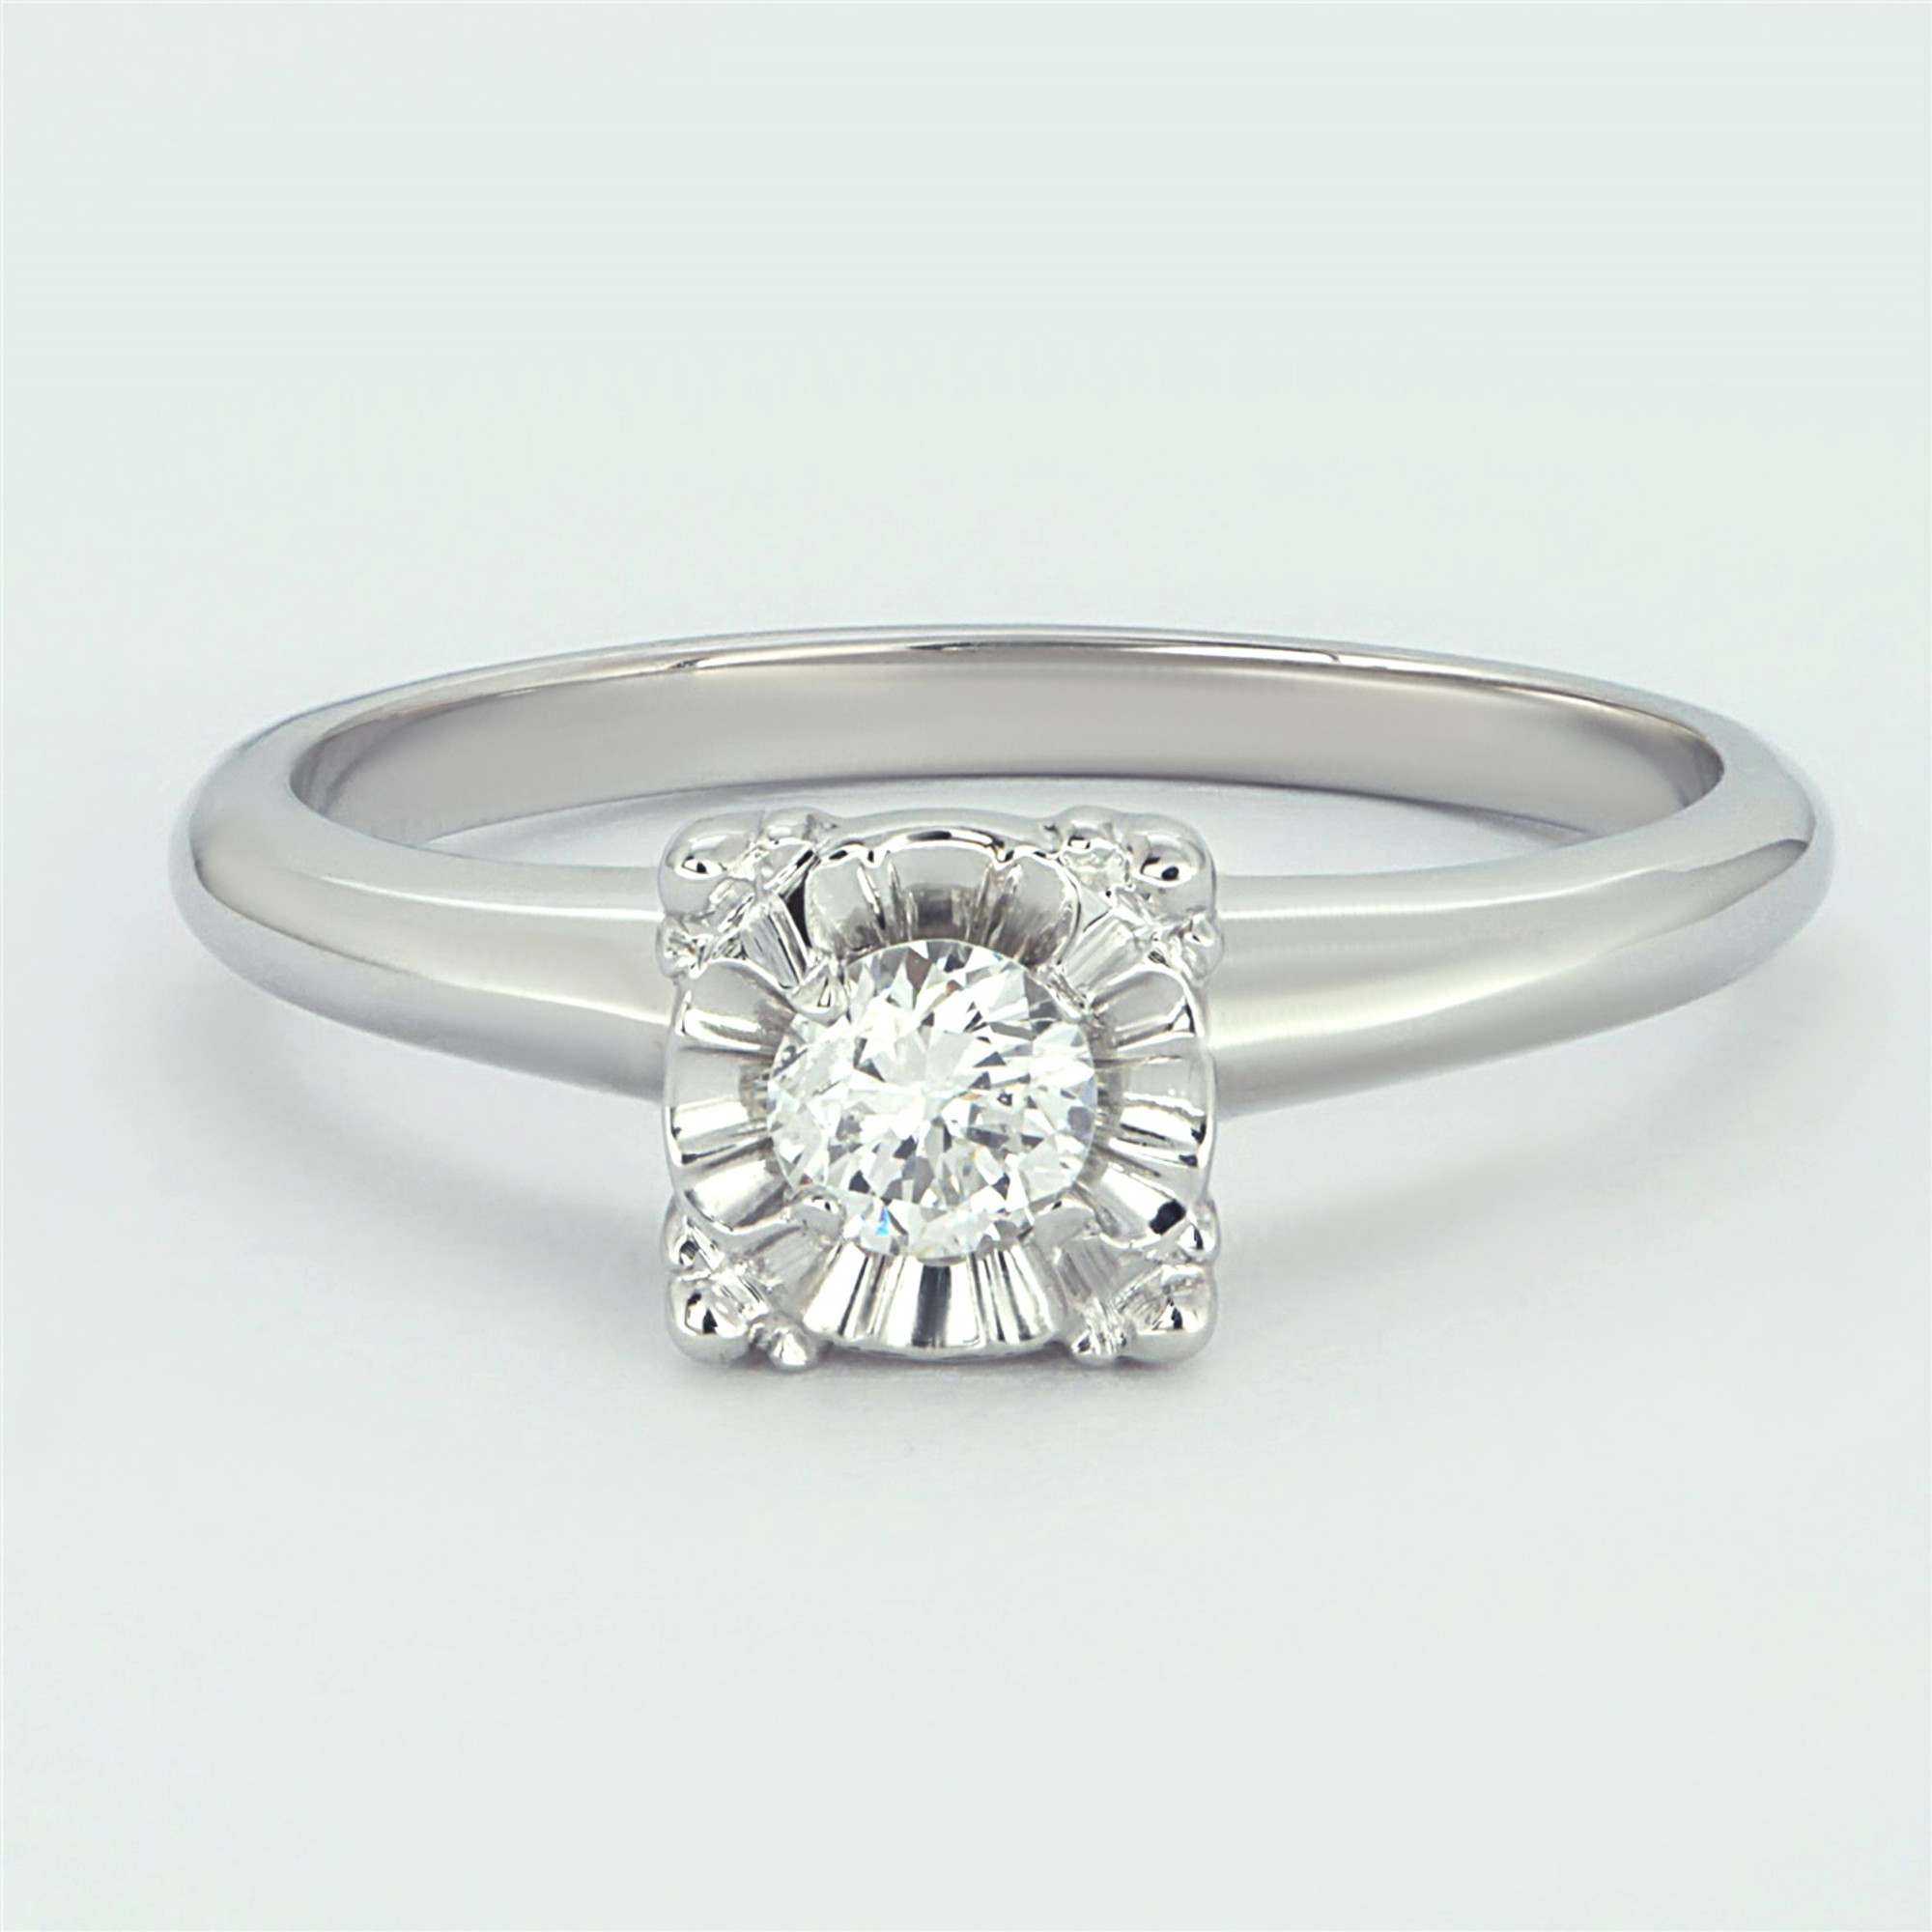 1950s Vintage 14K White Gold Illusion Setting Diamond Ring, .21ct